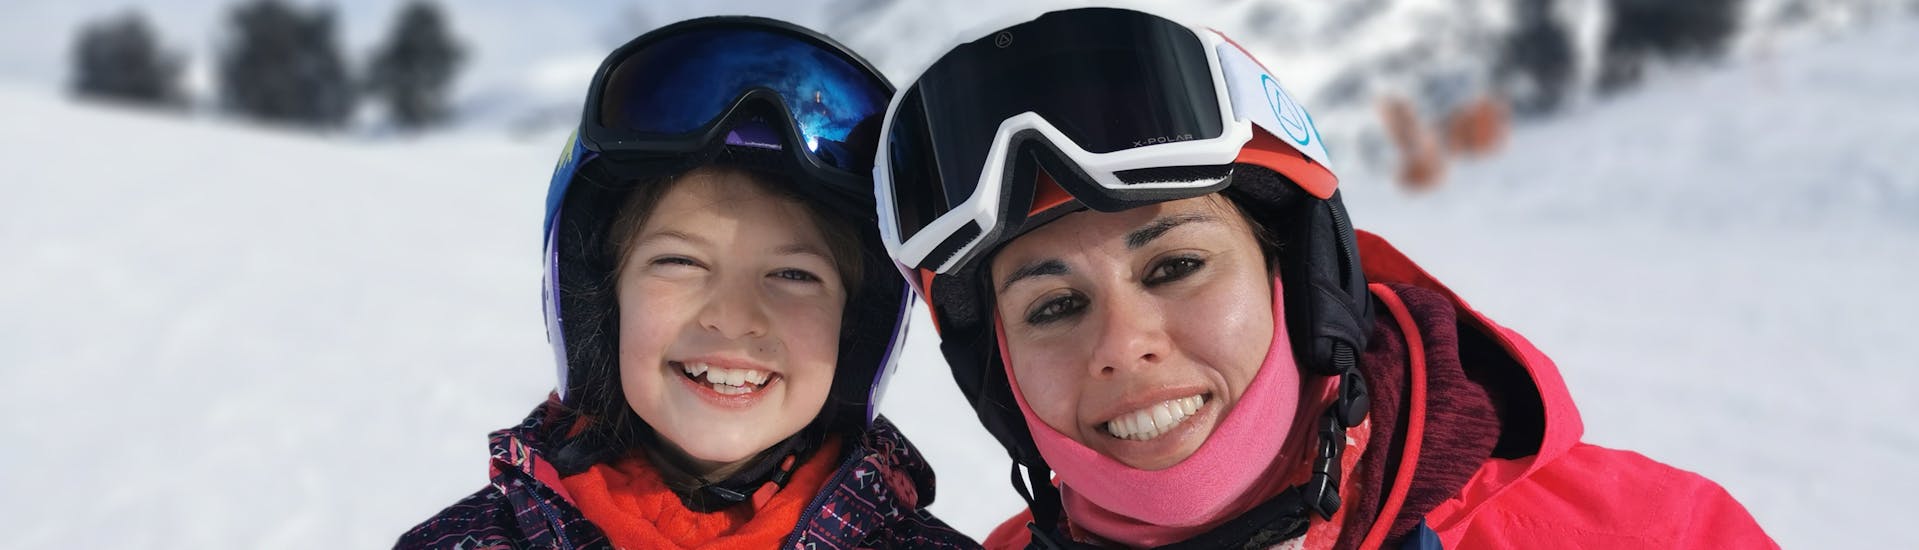 Kindersnowboardlessen (4-16 j.) van alle niveaus - Halve dag met Ski Life Escuela de Esquí Baqueira.